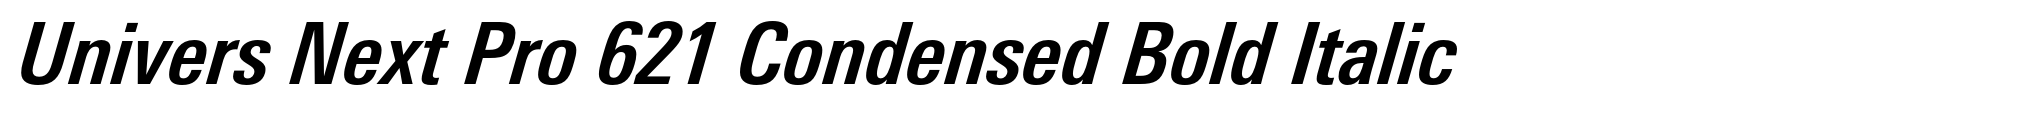 Univers Next Pro 621 Condensed Bold Italic image